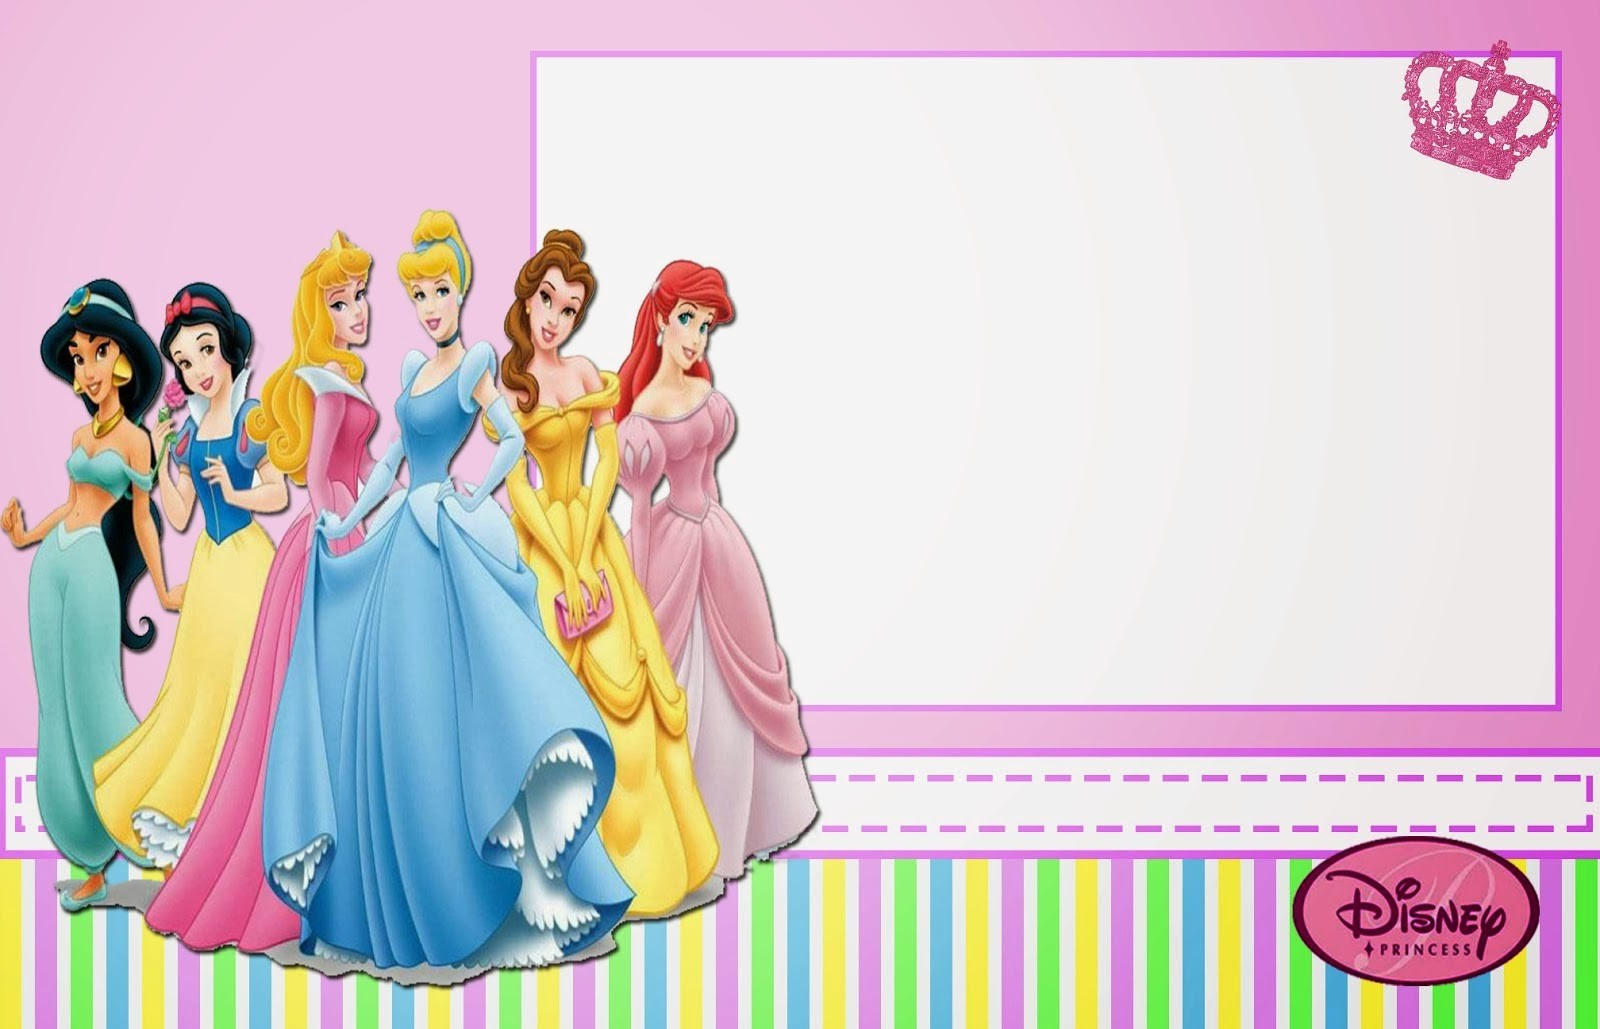 Disney Princess Picture Frames Free Printable Invitations Cards Or - Free Printable Princess Invitation Cards